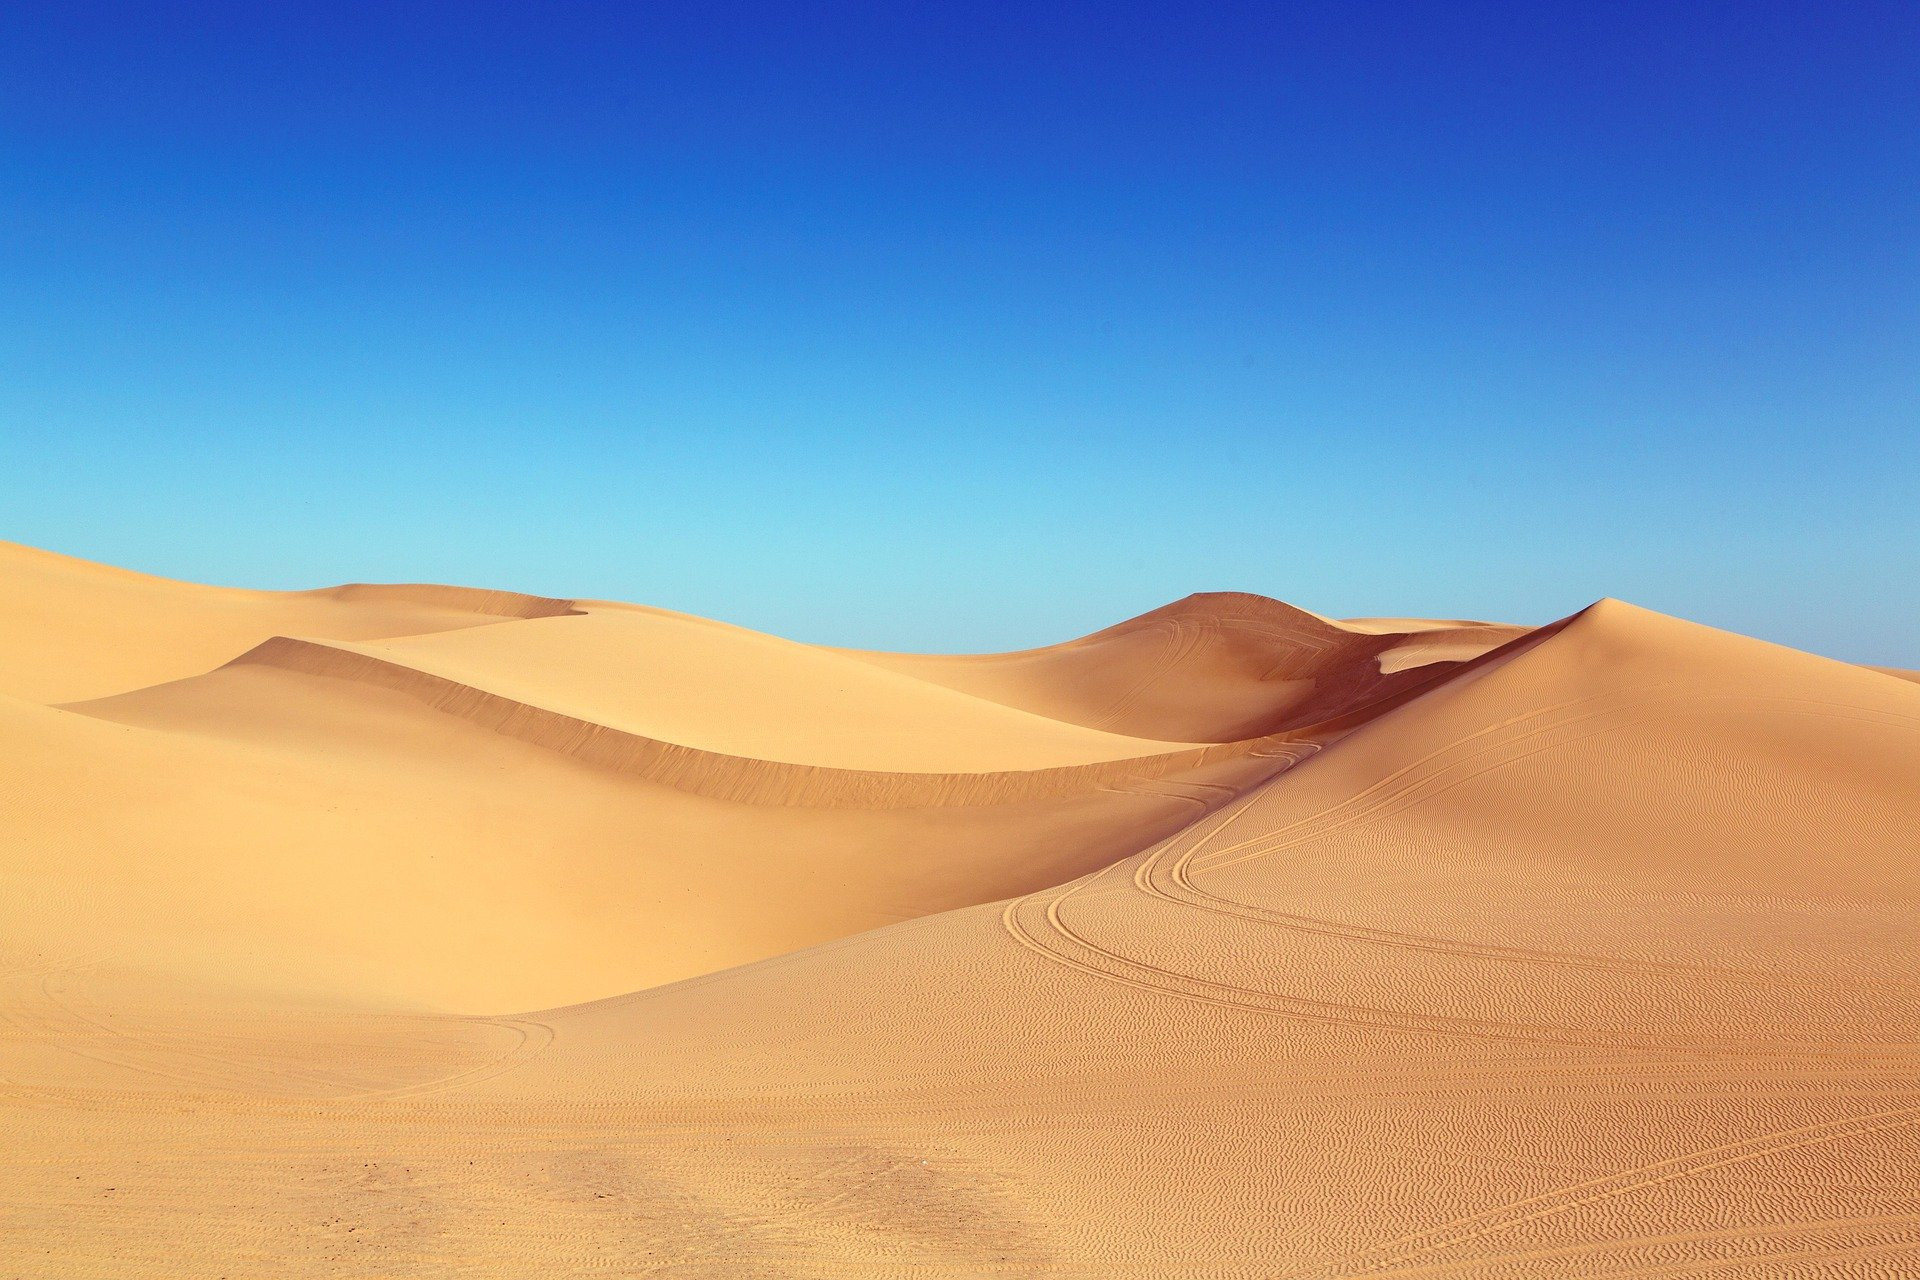 Golden sand dunes in the Sahara desert under a bright blue sky